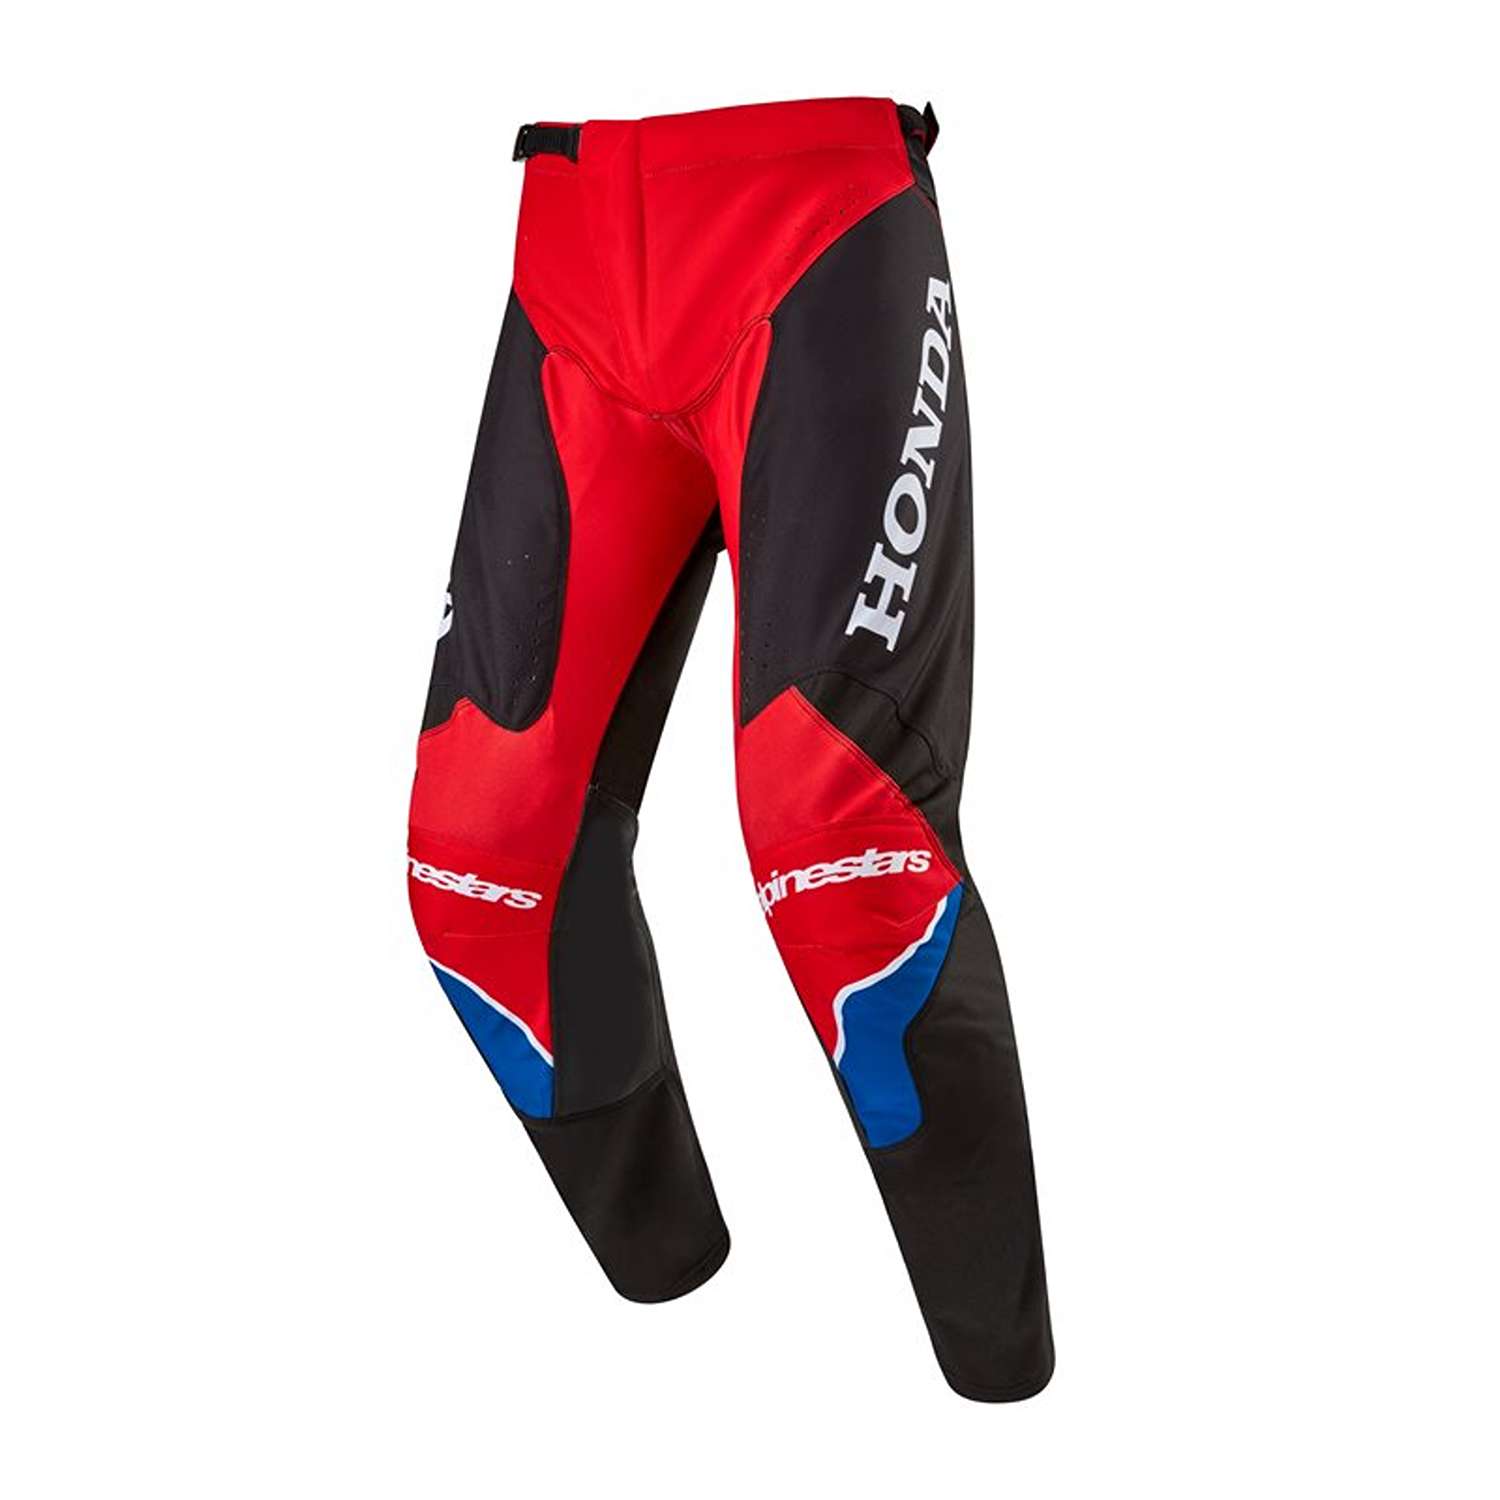 Image of Alpinestars Honda Racer Iconic Pants Bright Red Black White Size 30 ID 8059347169705